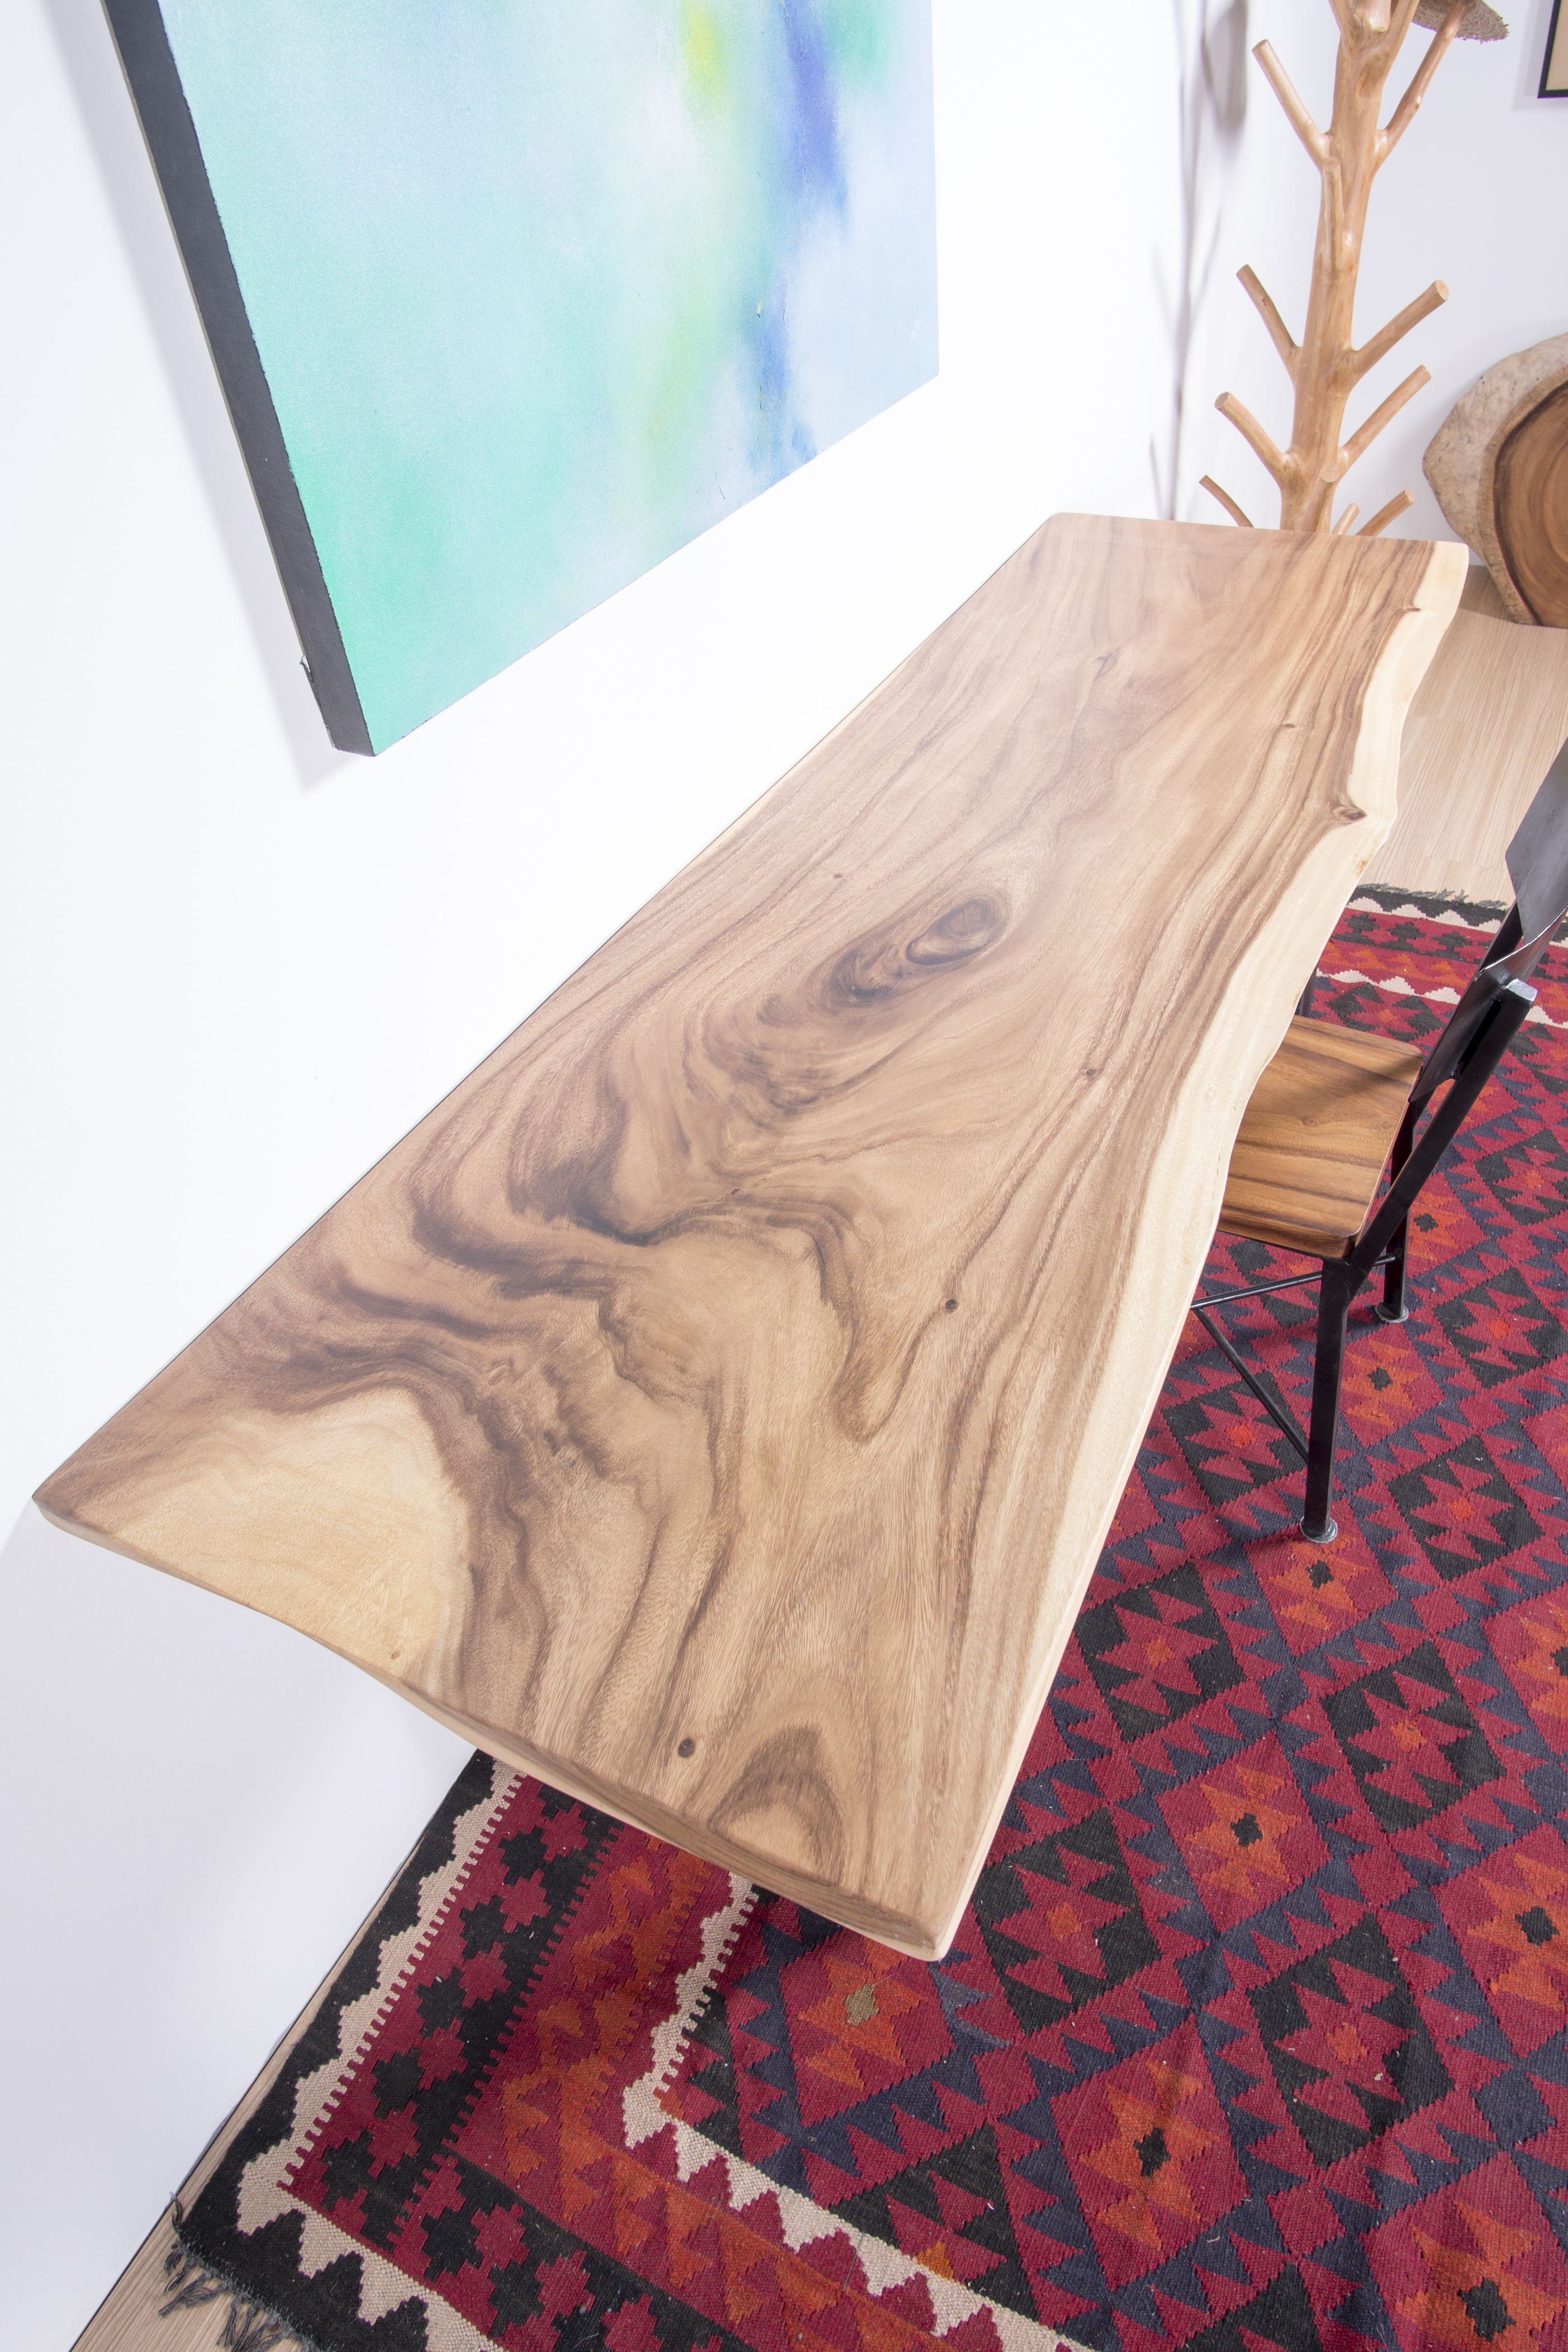 Custom Live Edge Wood Slab Table Ideal As Small Dining Table